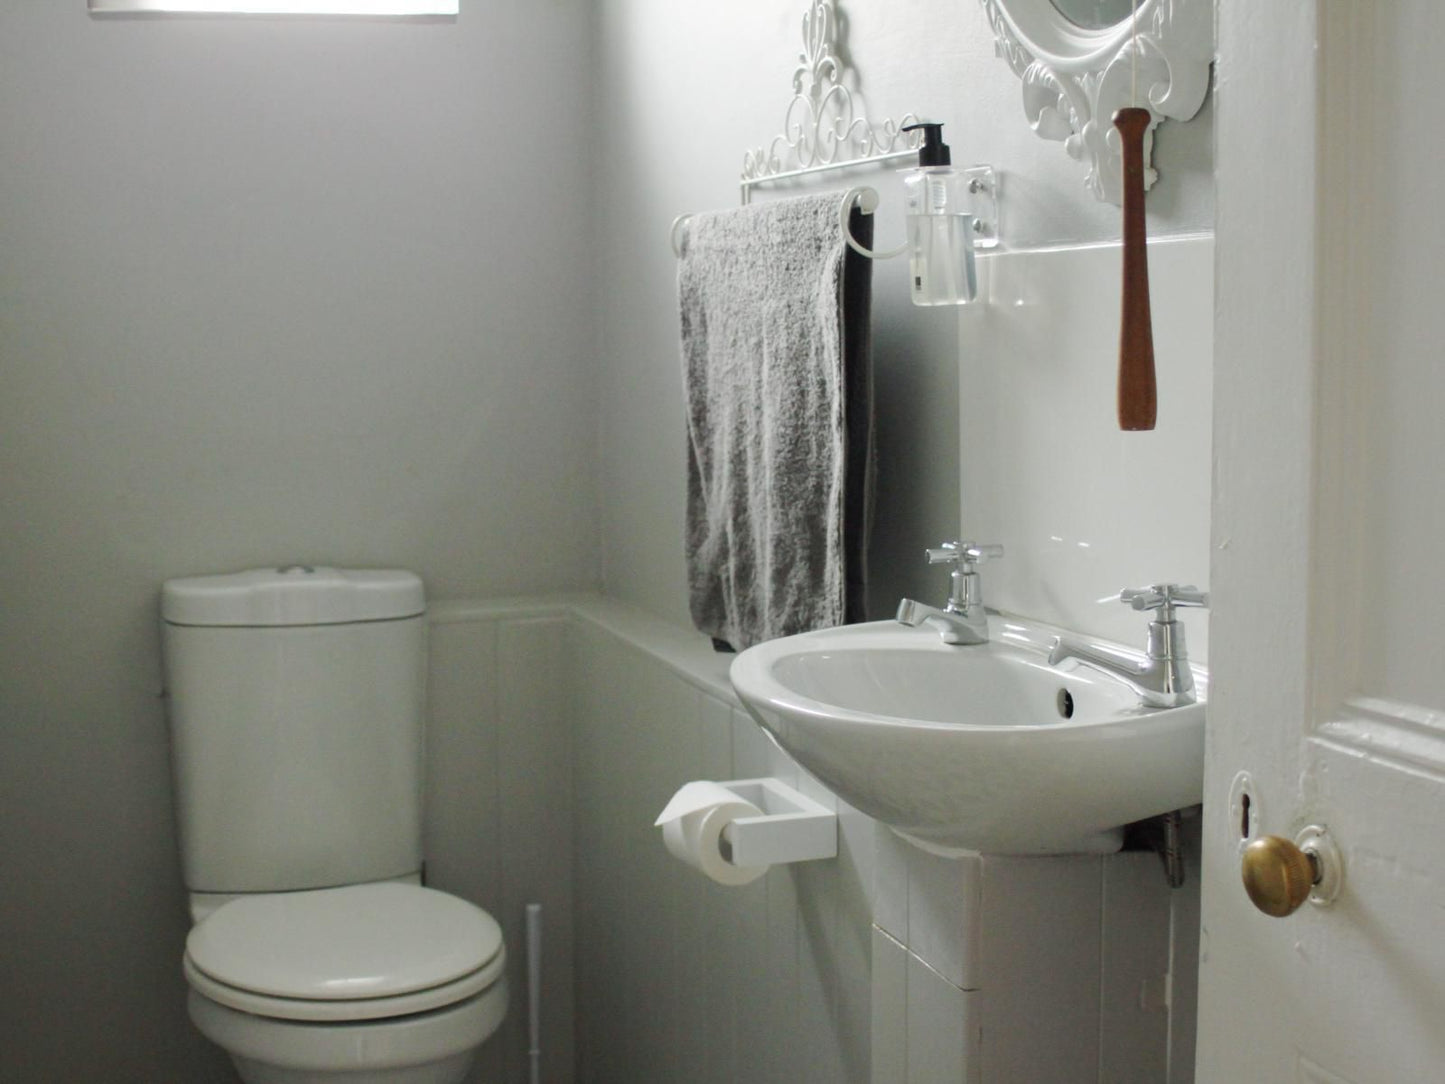 At The Loerie Knysna Central Knysna Western Cape South Africa Colorless, Bathroom